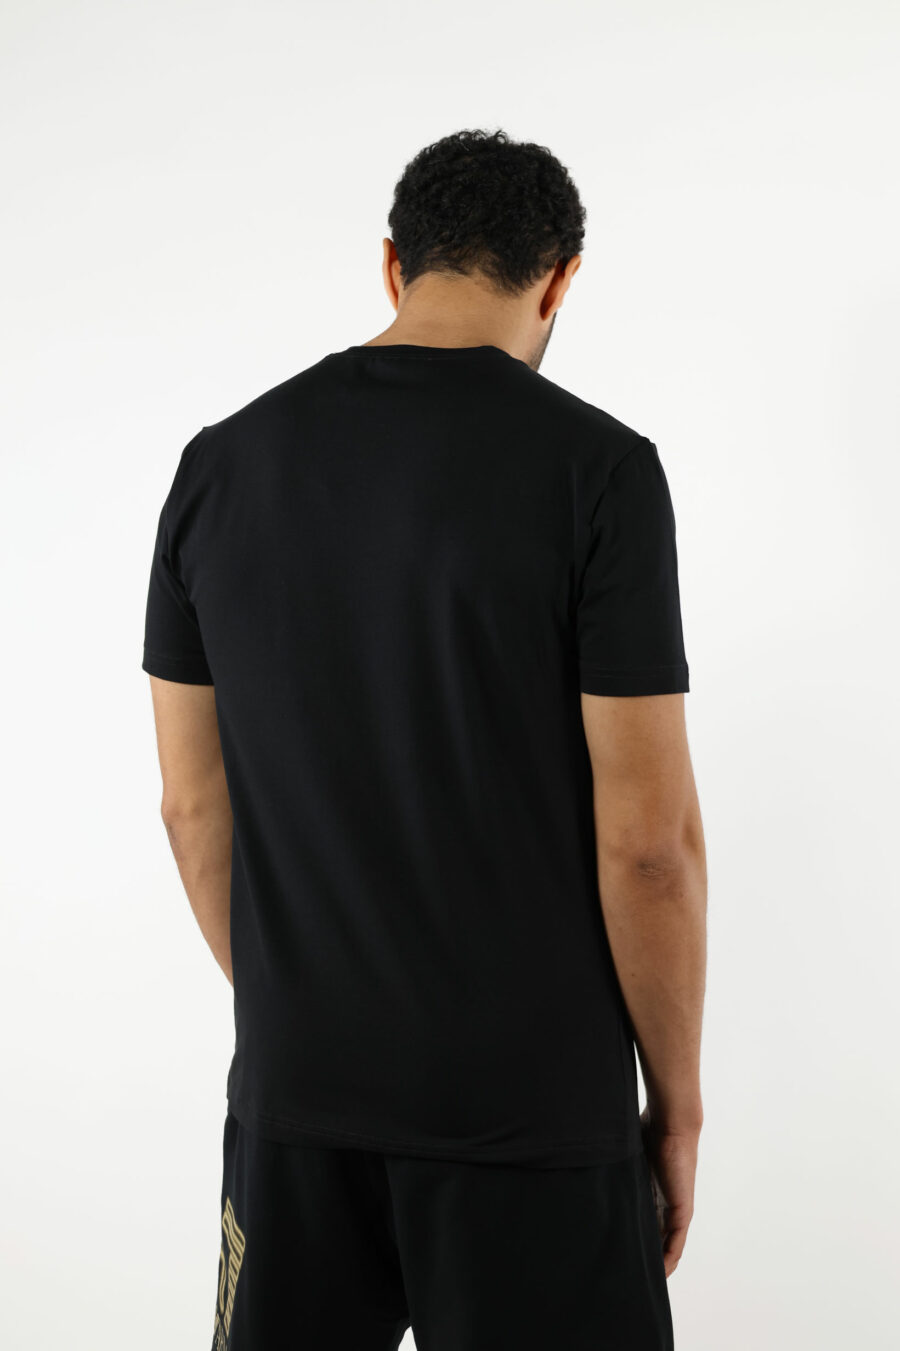 Black T-shirt with neon gold "lux identity" maxilogo - 110904